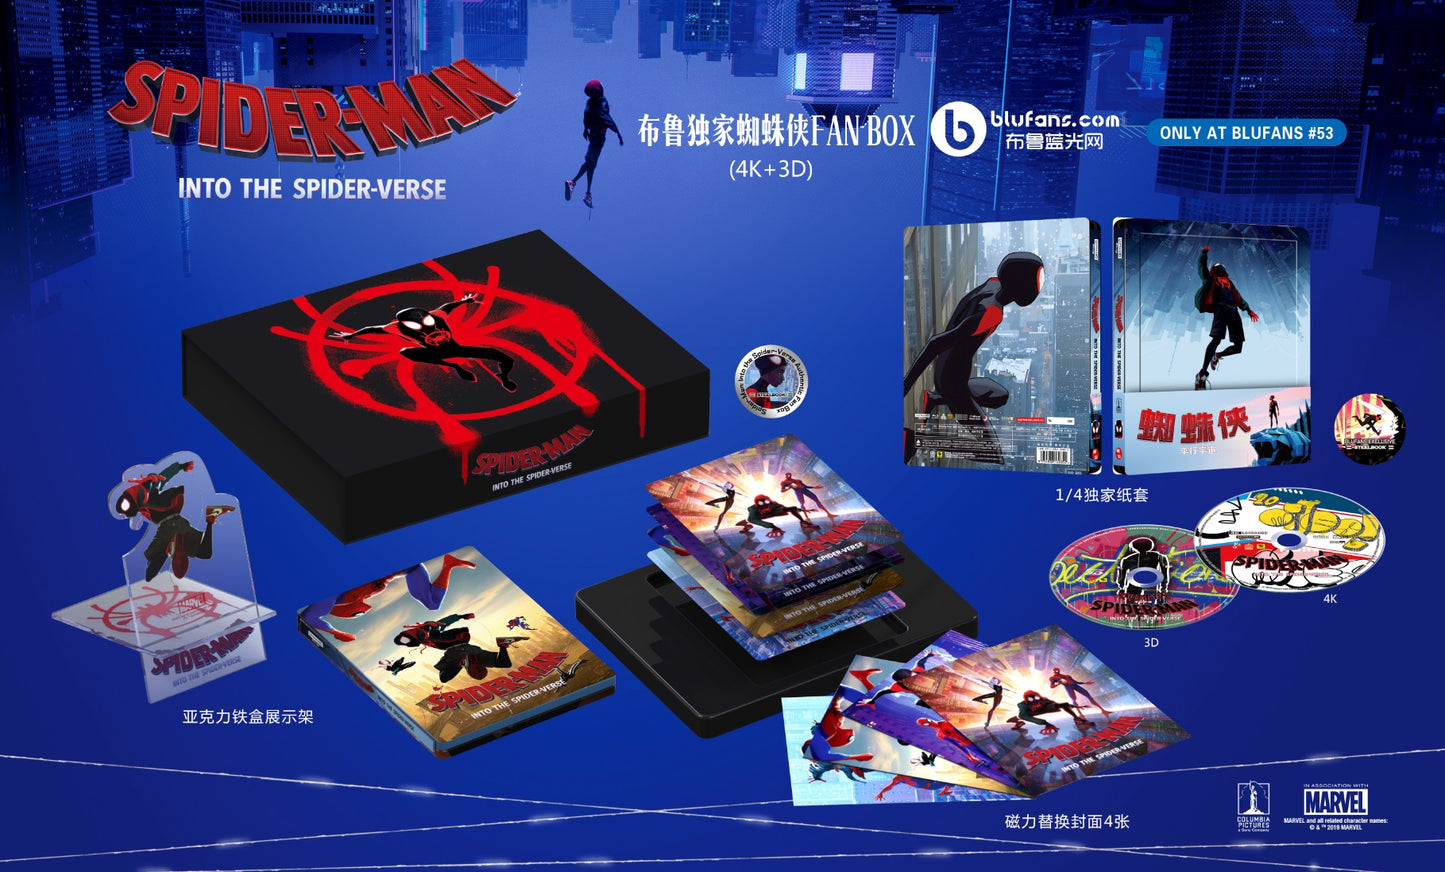 Spider-Man: Into the Spider-Verse (4K+3D Blu-ray SteelBook) (Blufans Exclusive #53) Fan Box